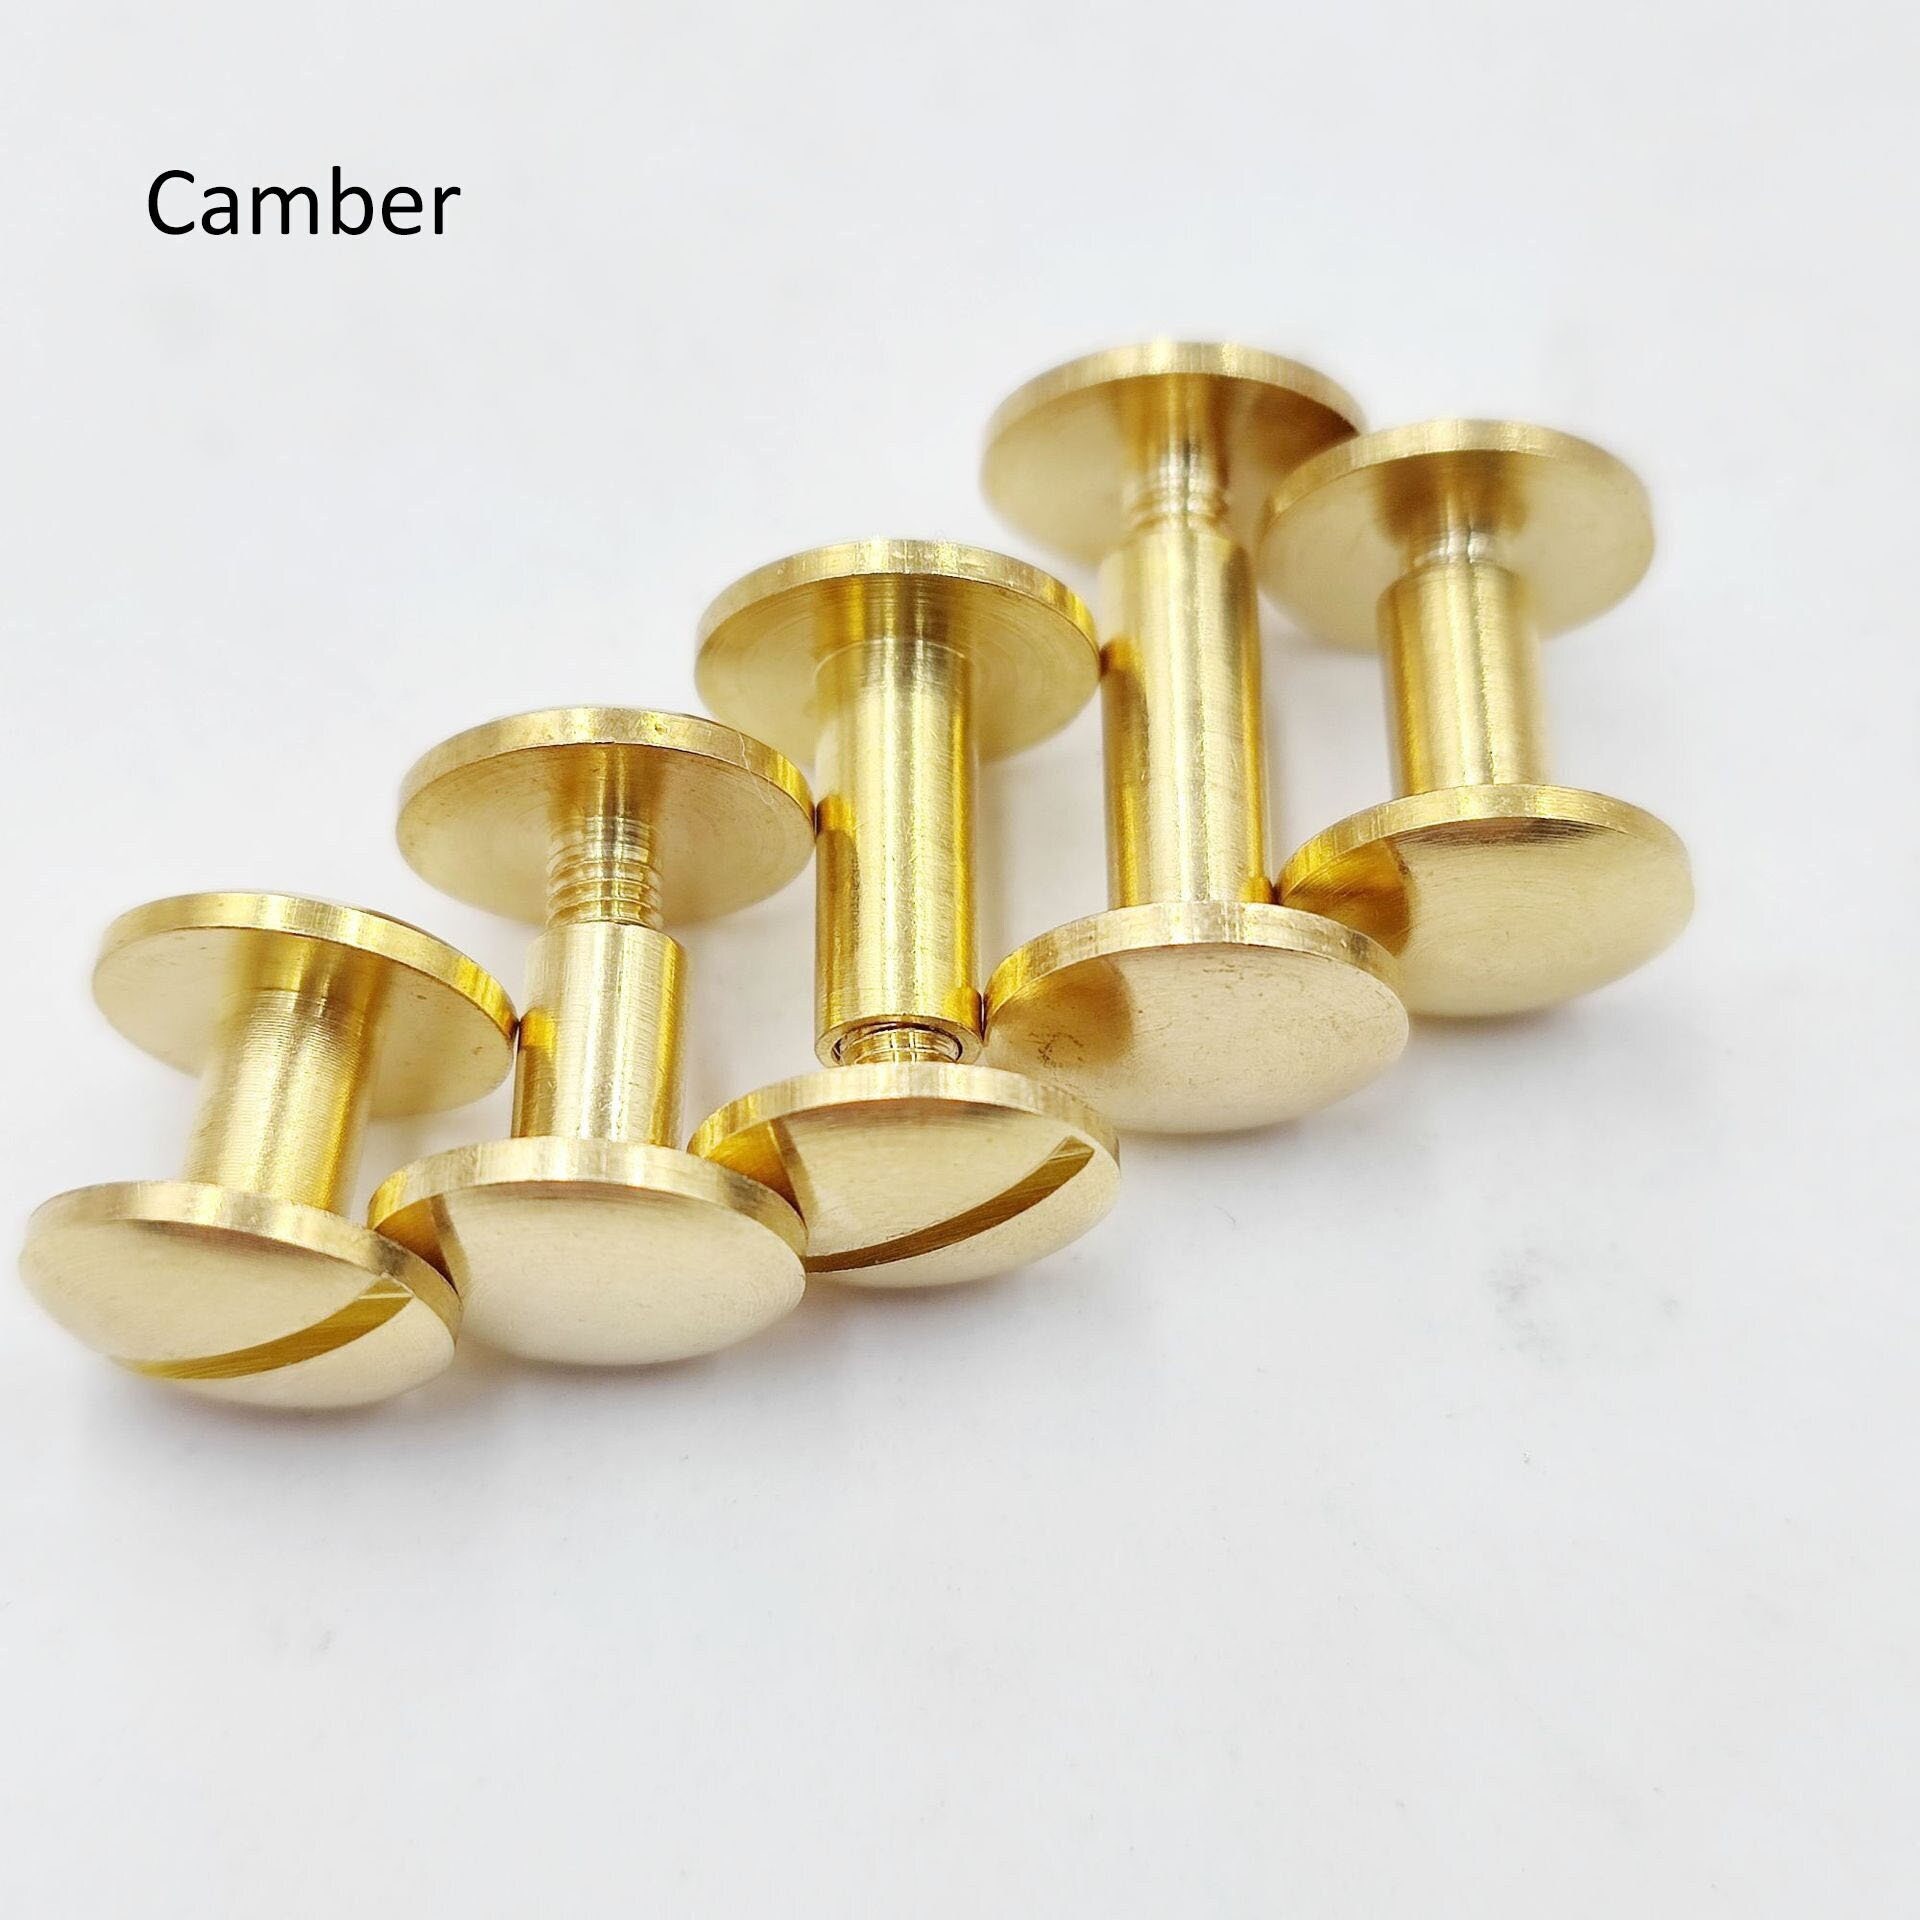 4 PCS solid brass eyelet screws grommets metal grommets for leather bag  craft bag loop handle connector rings